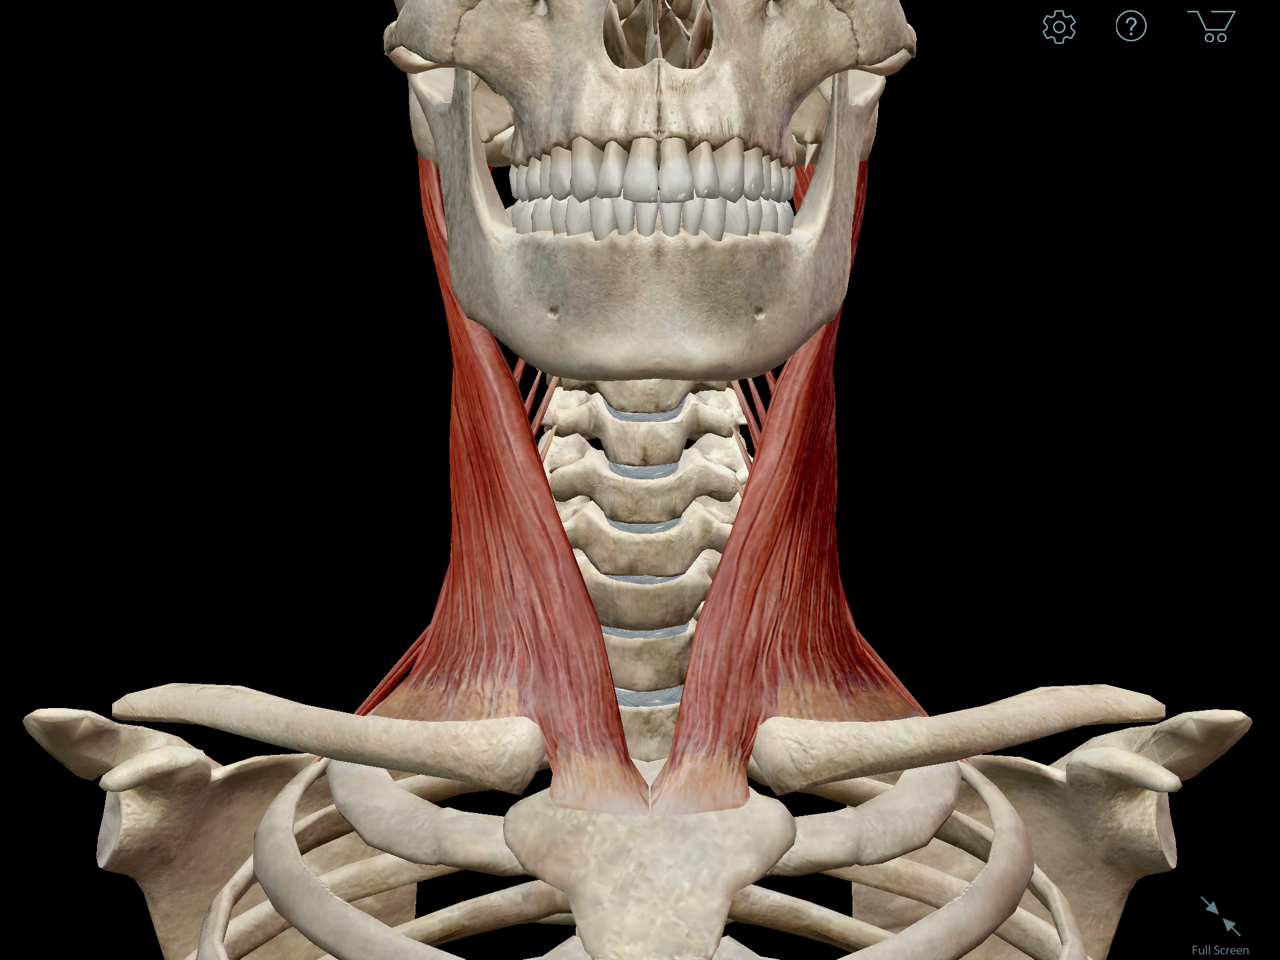 Male anatomy, artwork - Stock Image - F007/7362 - Science 